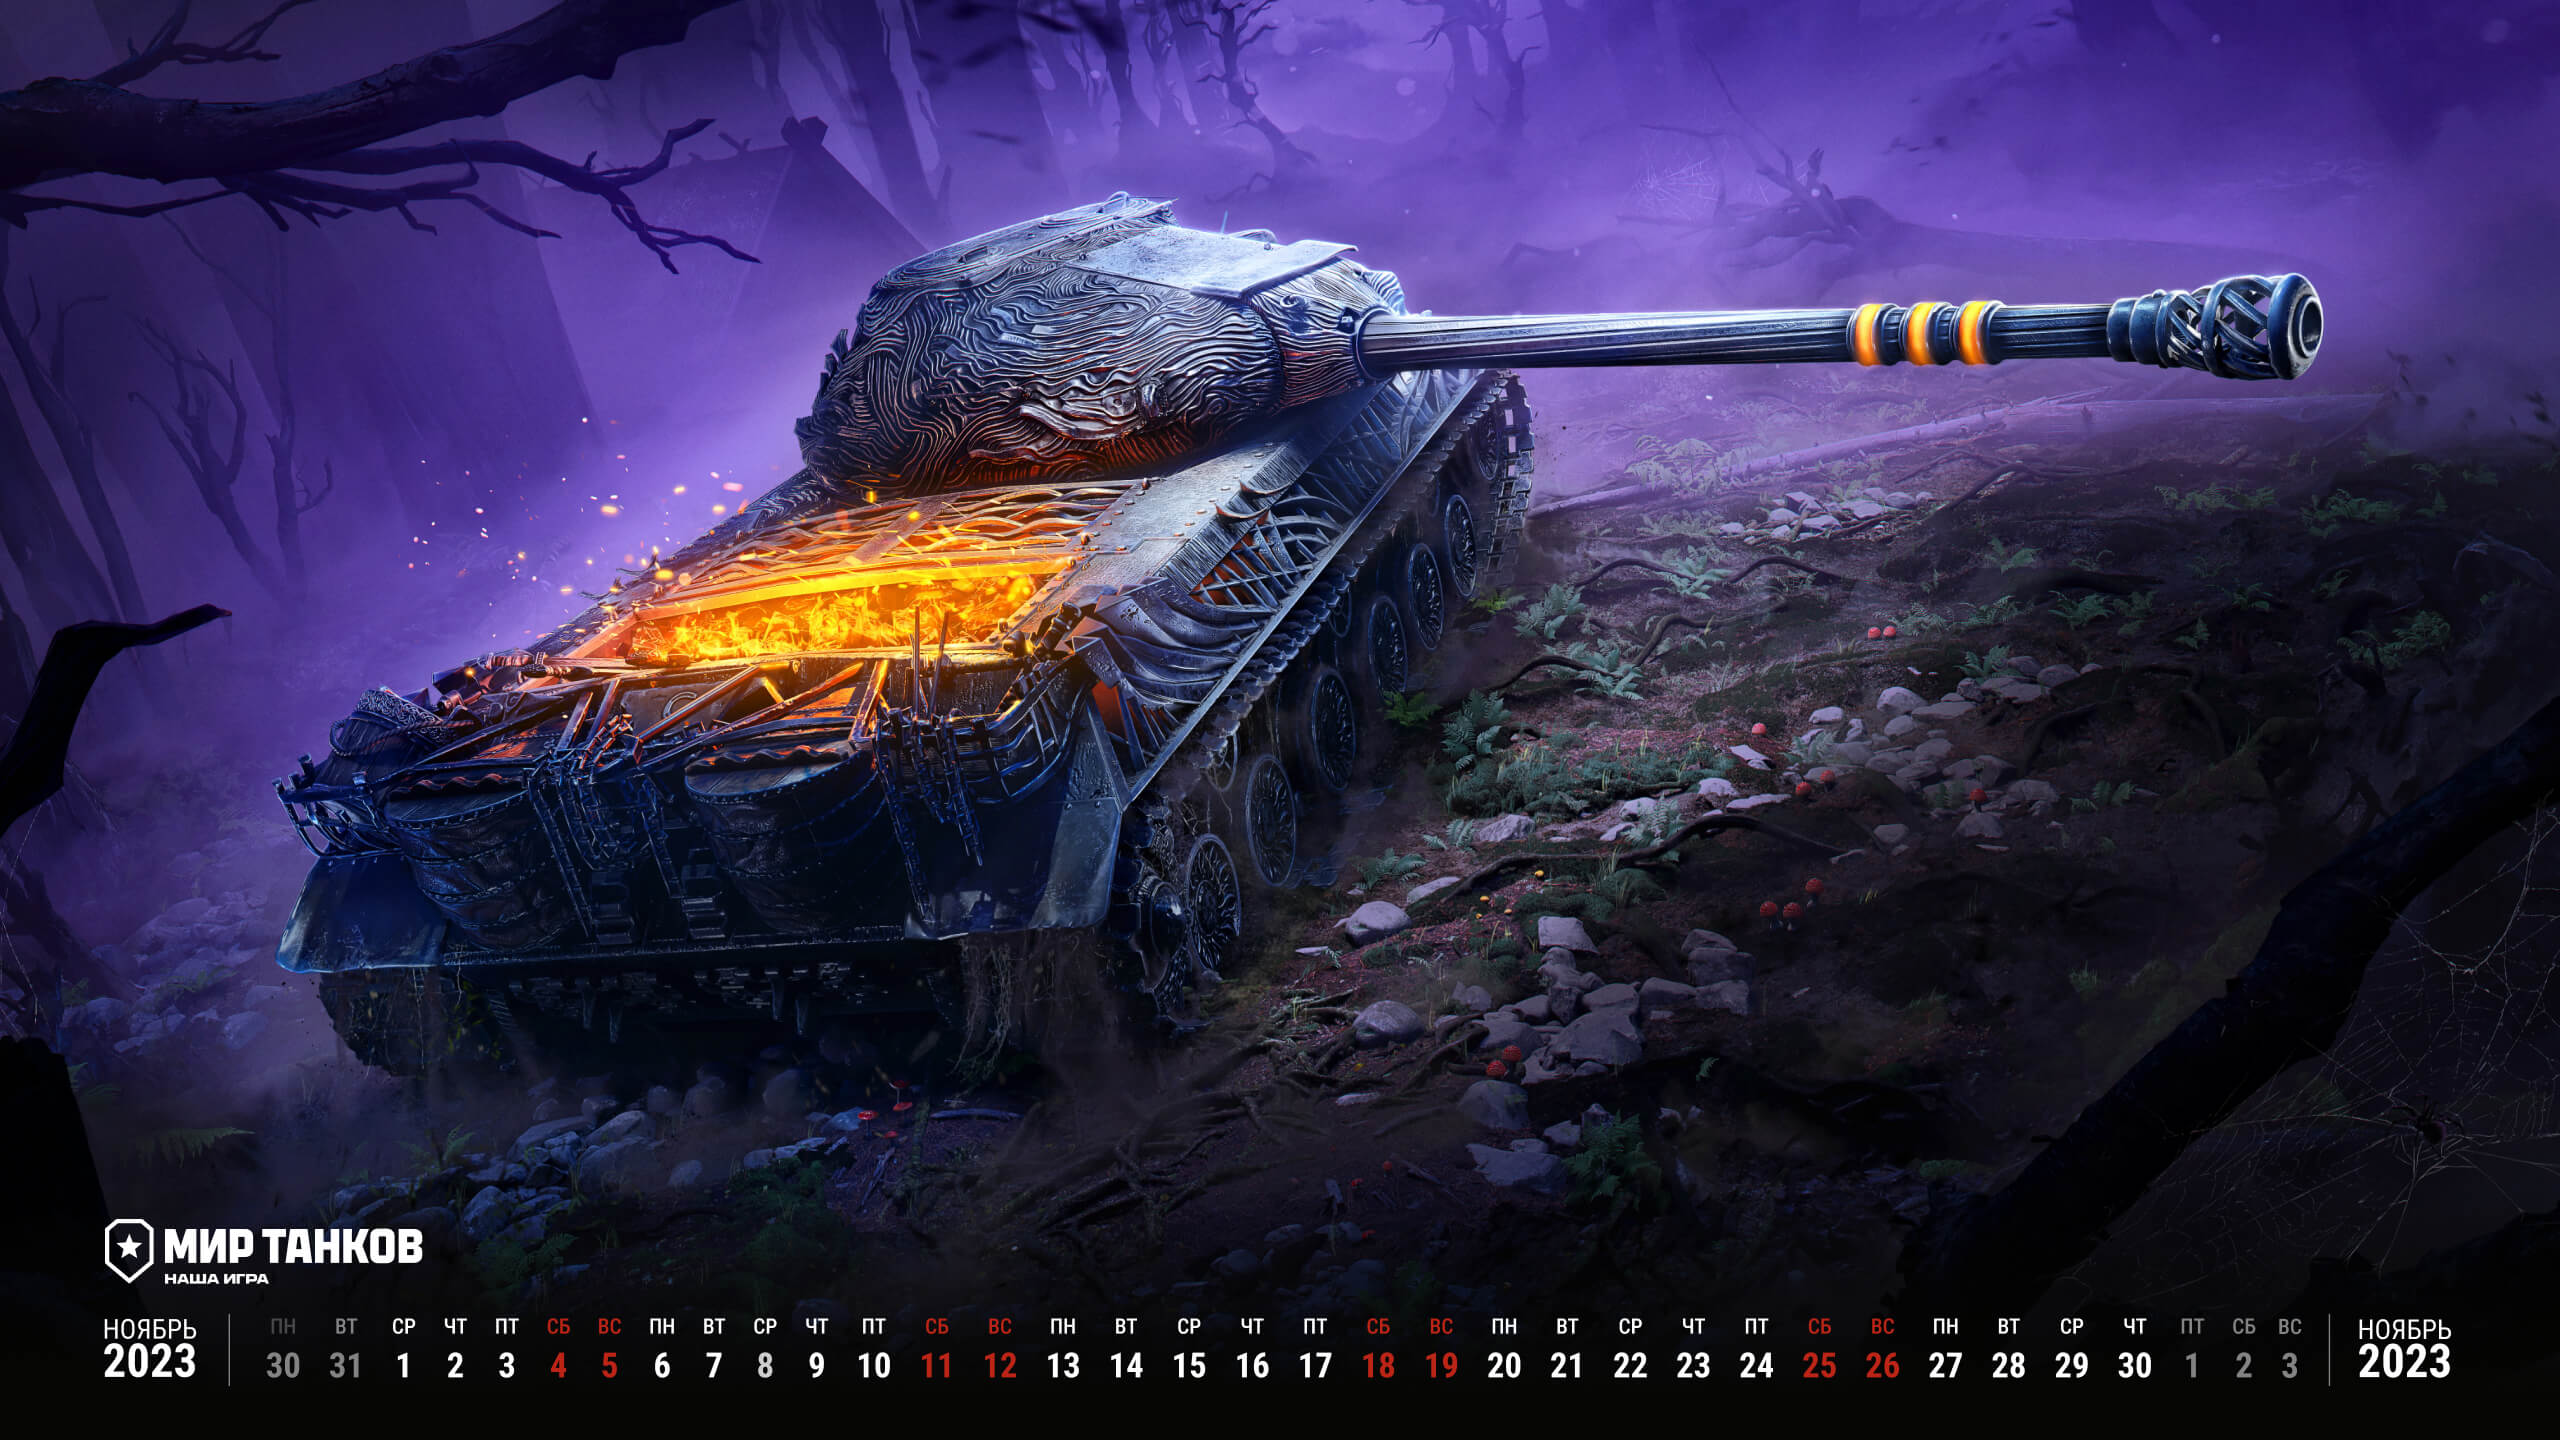 Тематические обои на рабочий стол и календари на месяц от онлайн-игры «Мир  танков»